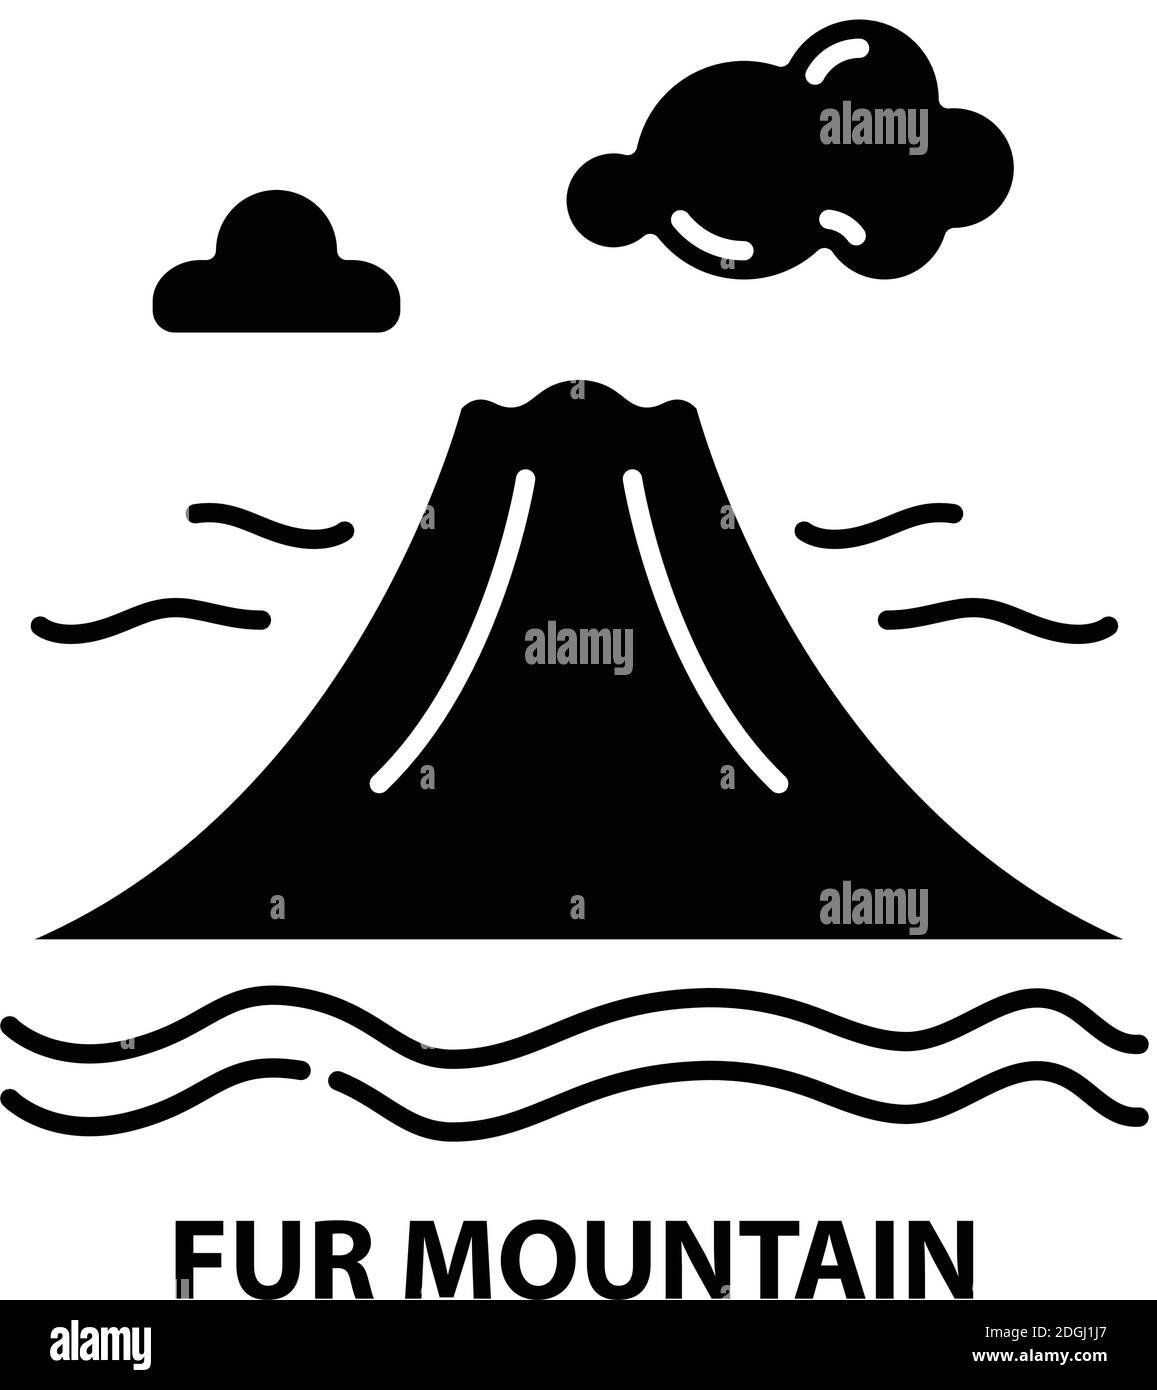 fur mountain icon, black vector sign with editable strokes, concept illustration Stock Vector